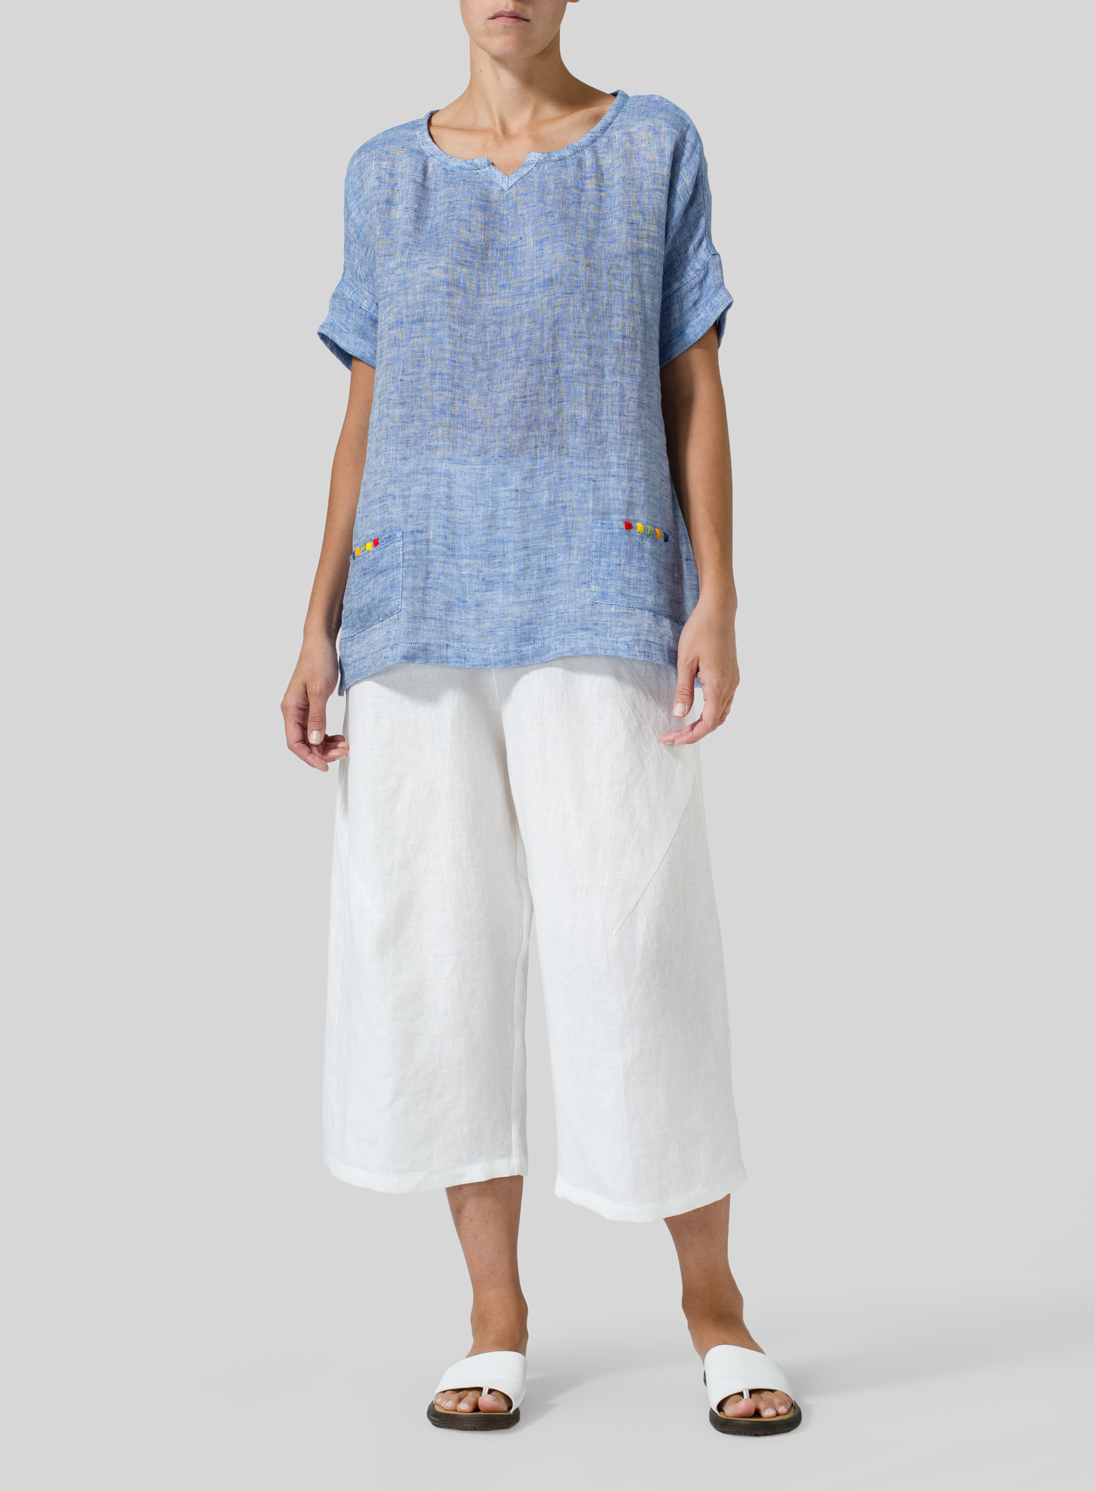 Vivid Linen Doublecloth Short Sleeve Top 